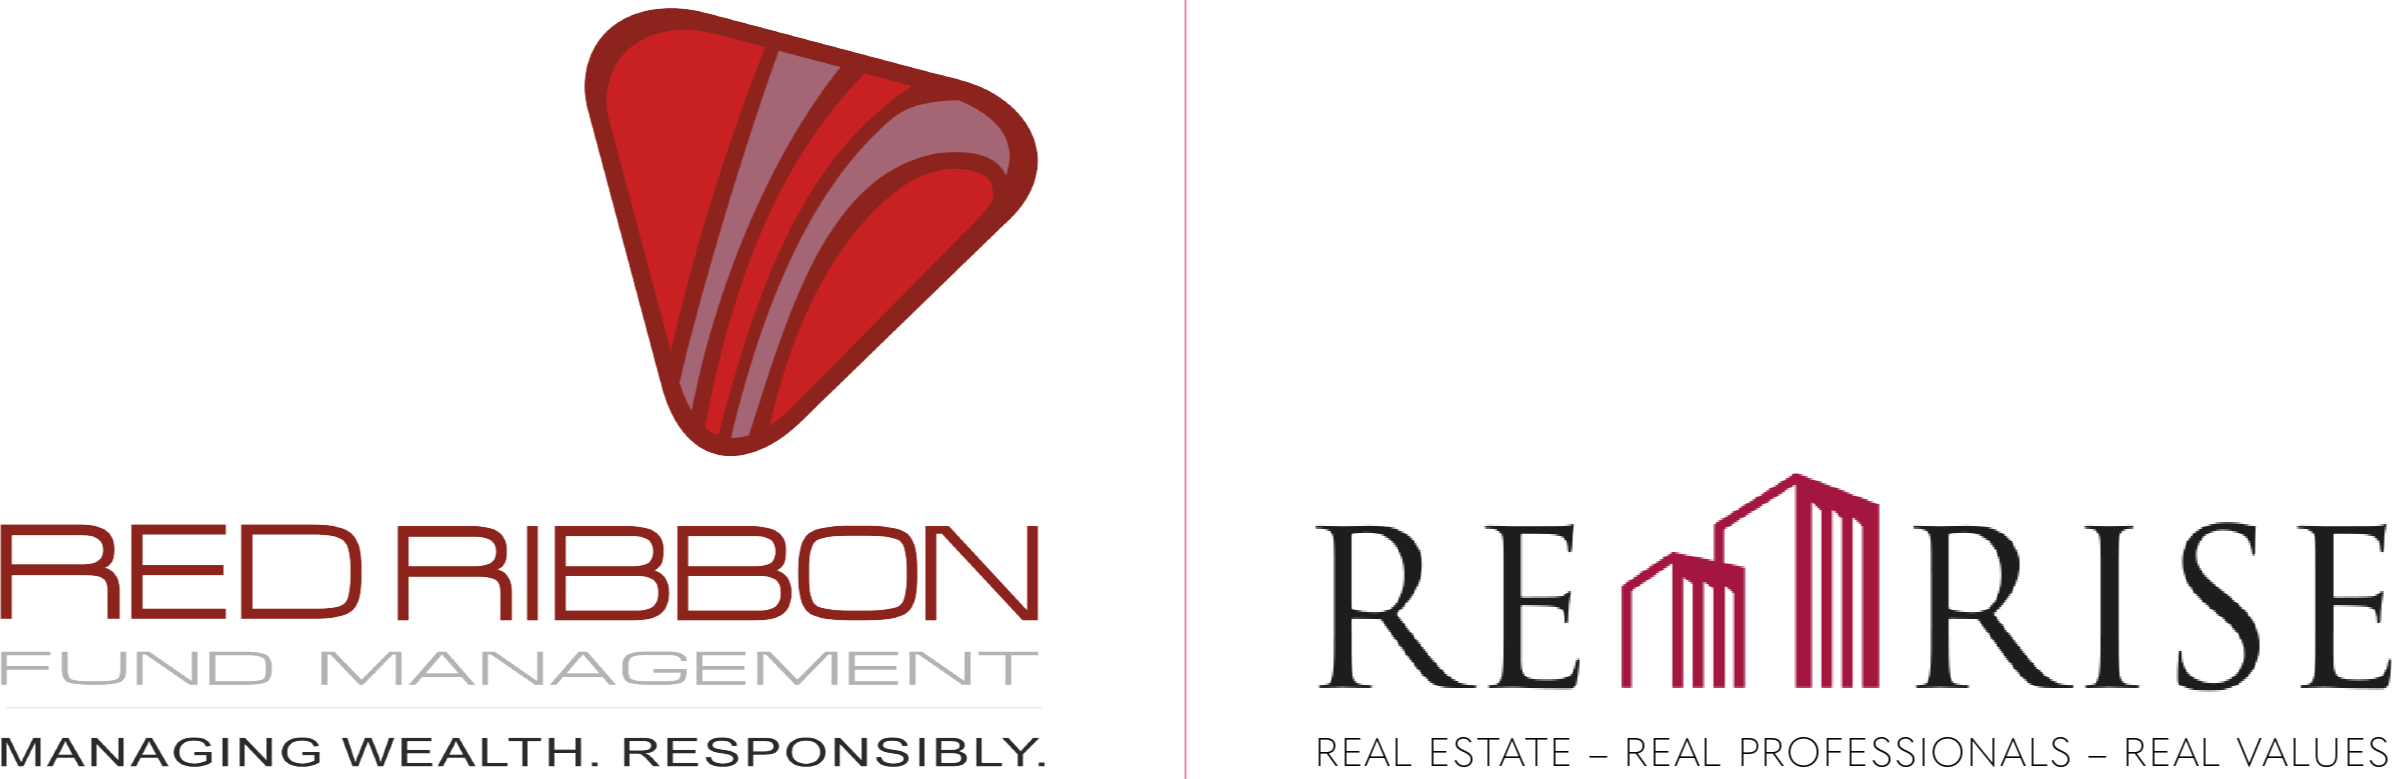 RRAM_Joint Venture Logo (Transparent)_FINAL